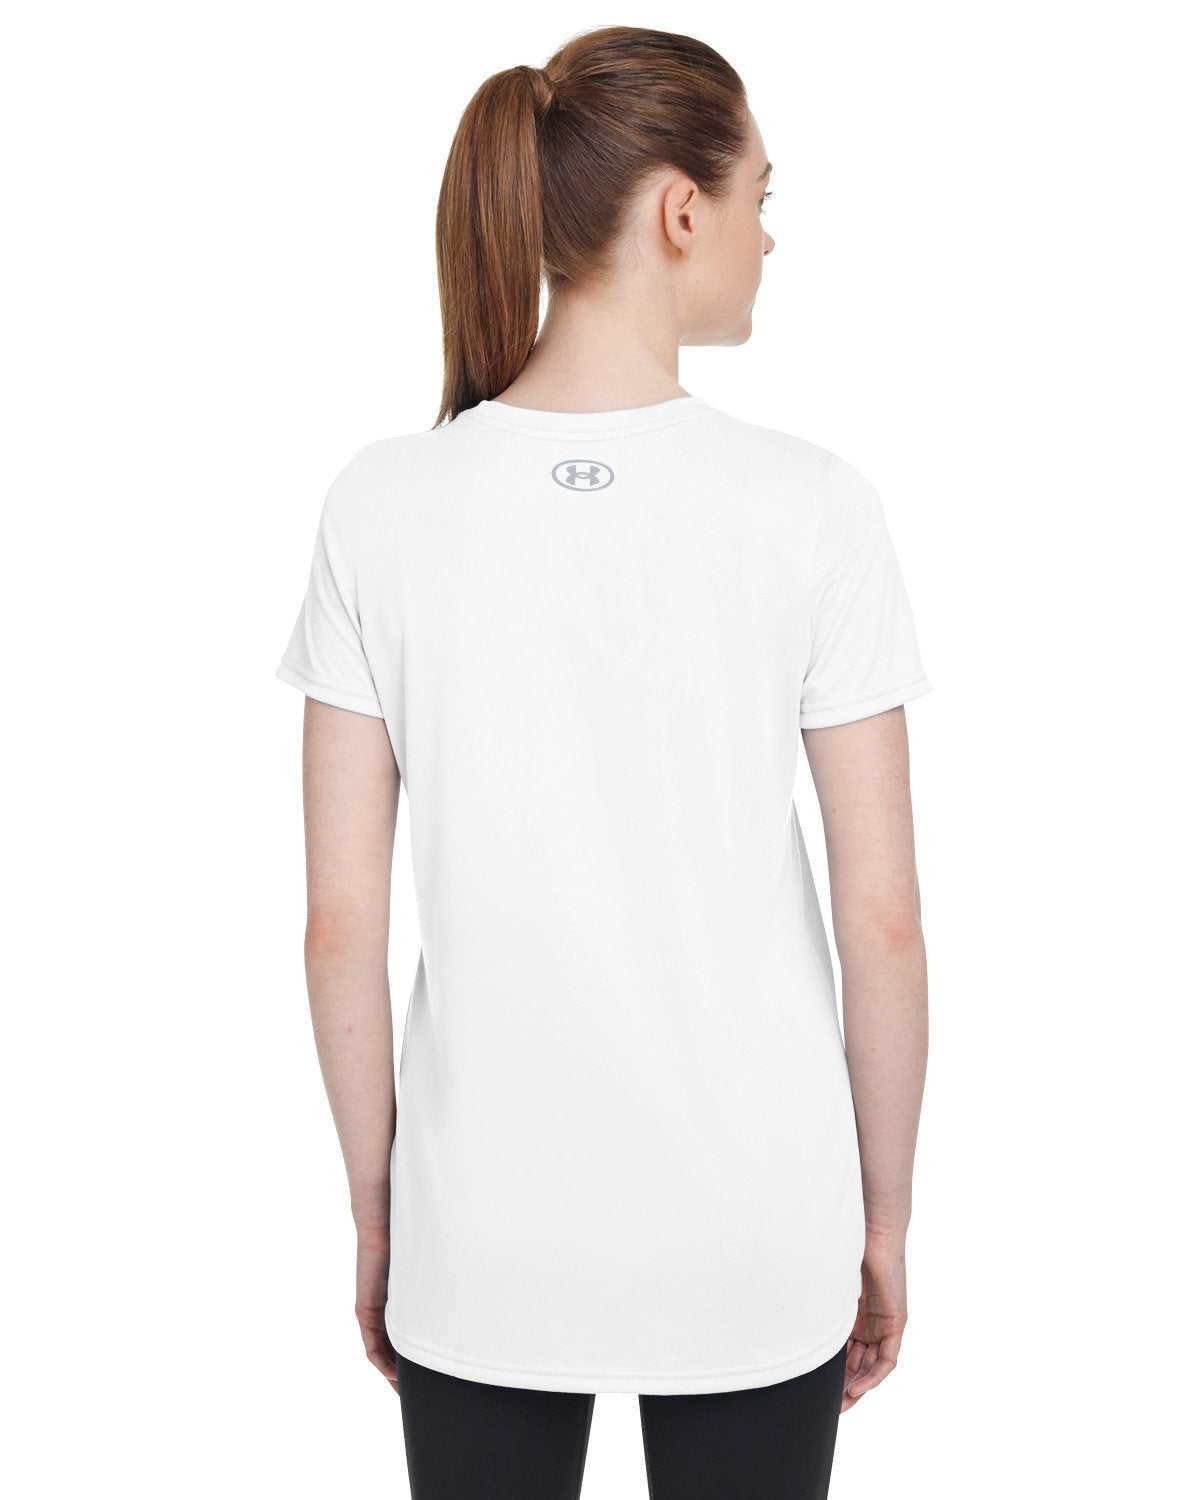 Under Armour Ladies Tech Custom T-Shirts, White